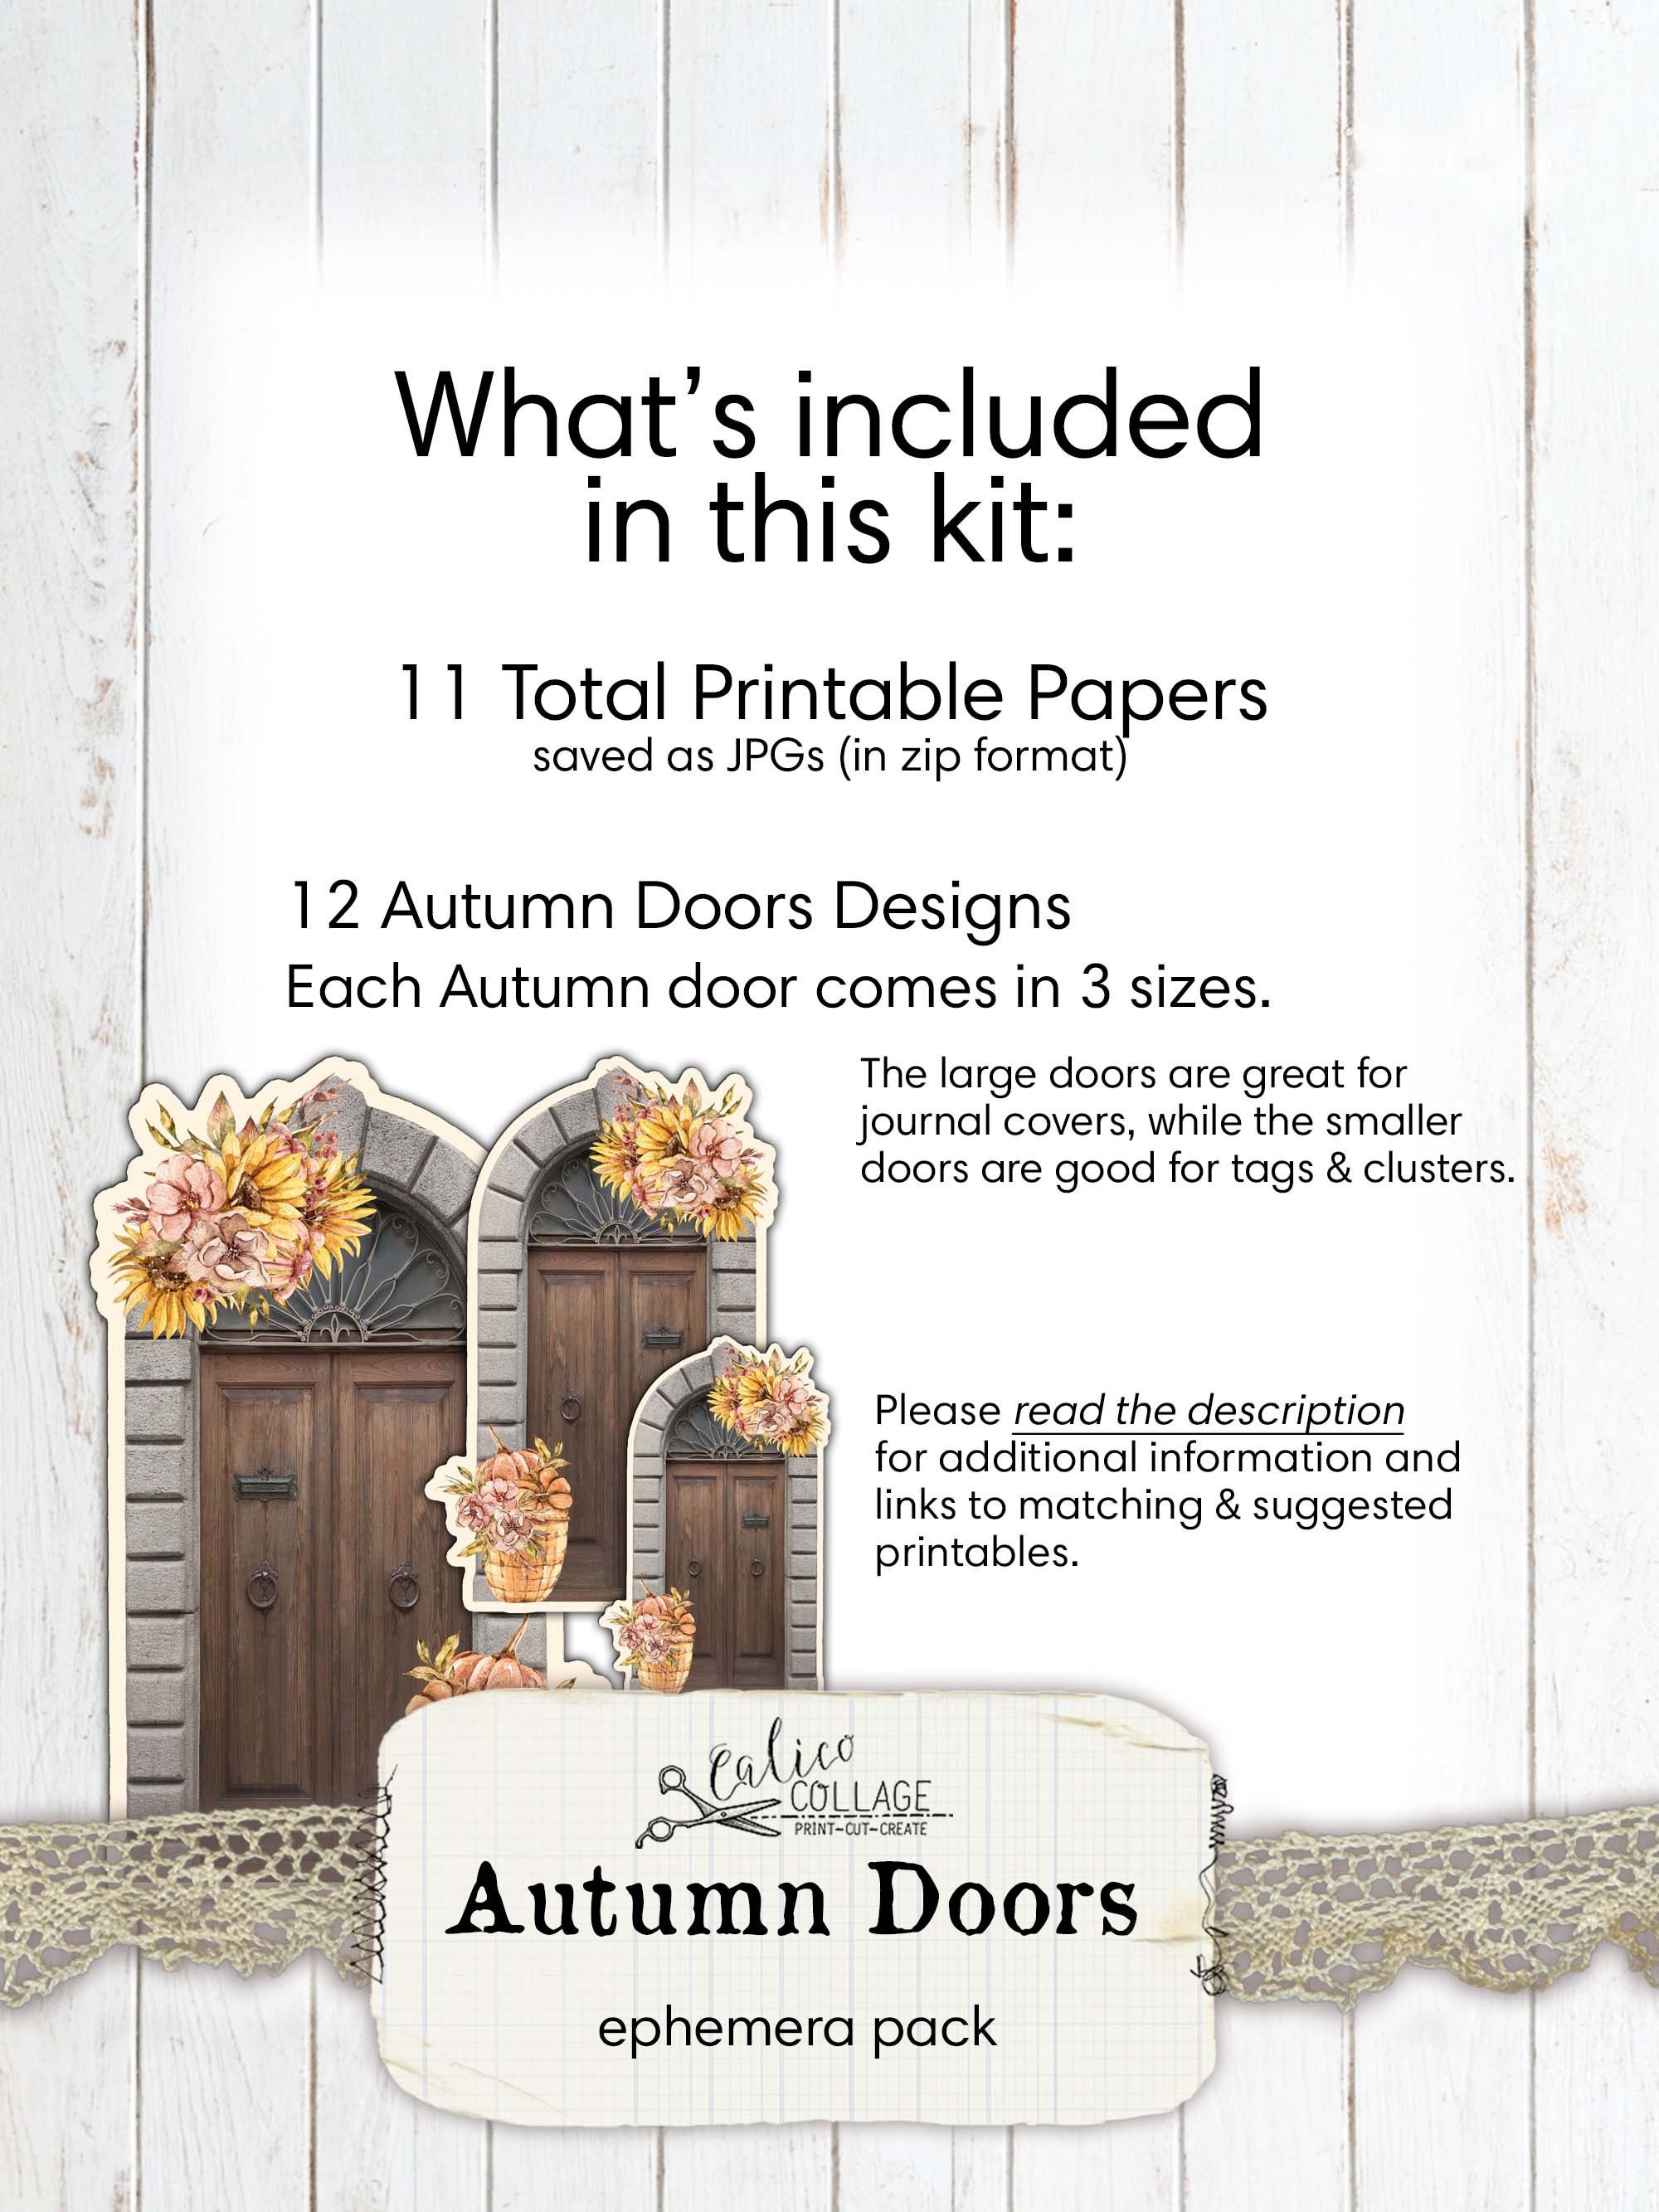 Autumn Ephemera for Junk Journals, Printable Fall Ephemera Pack